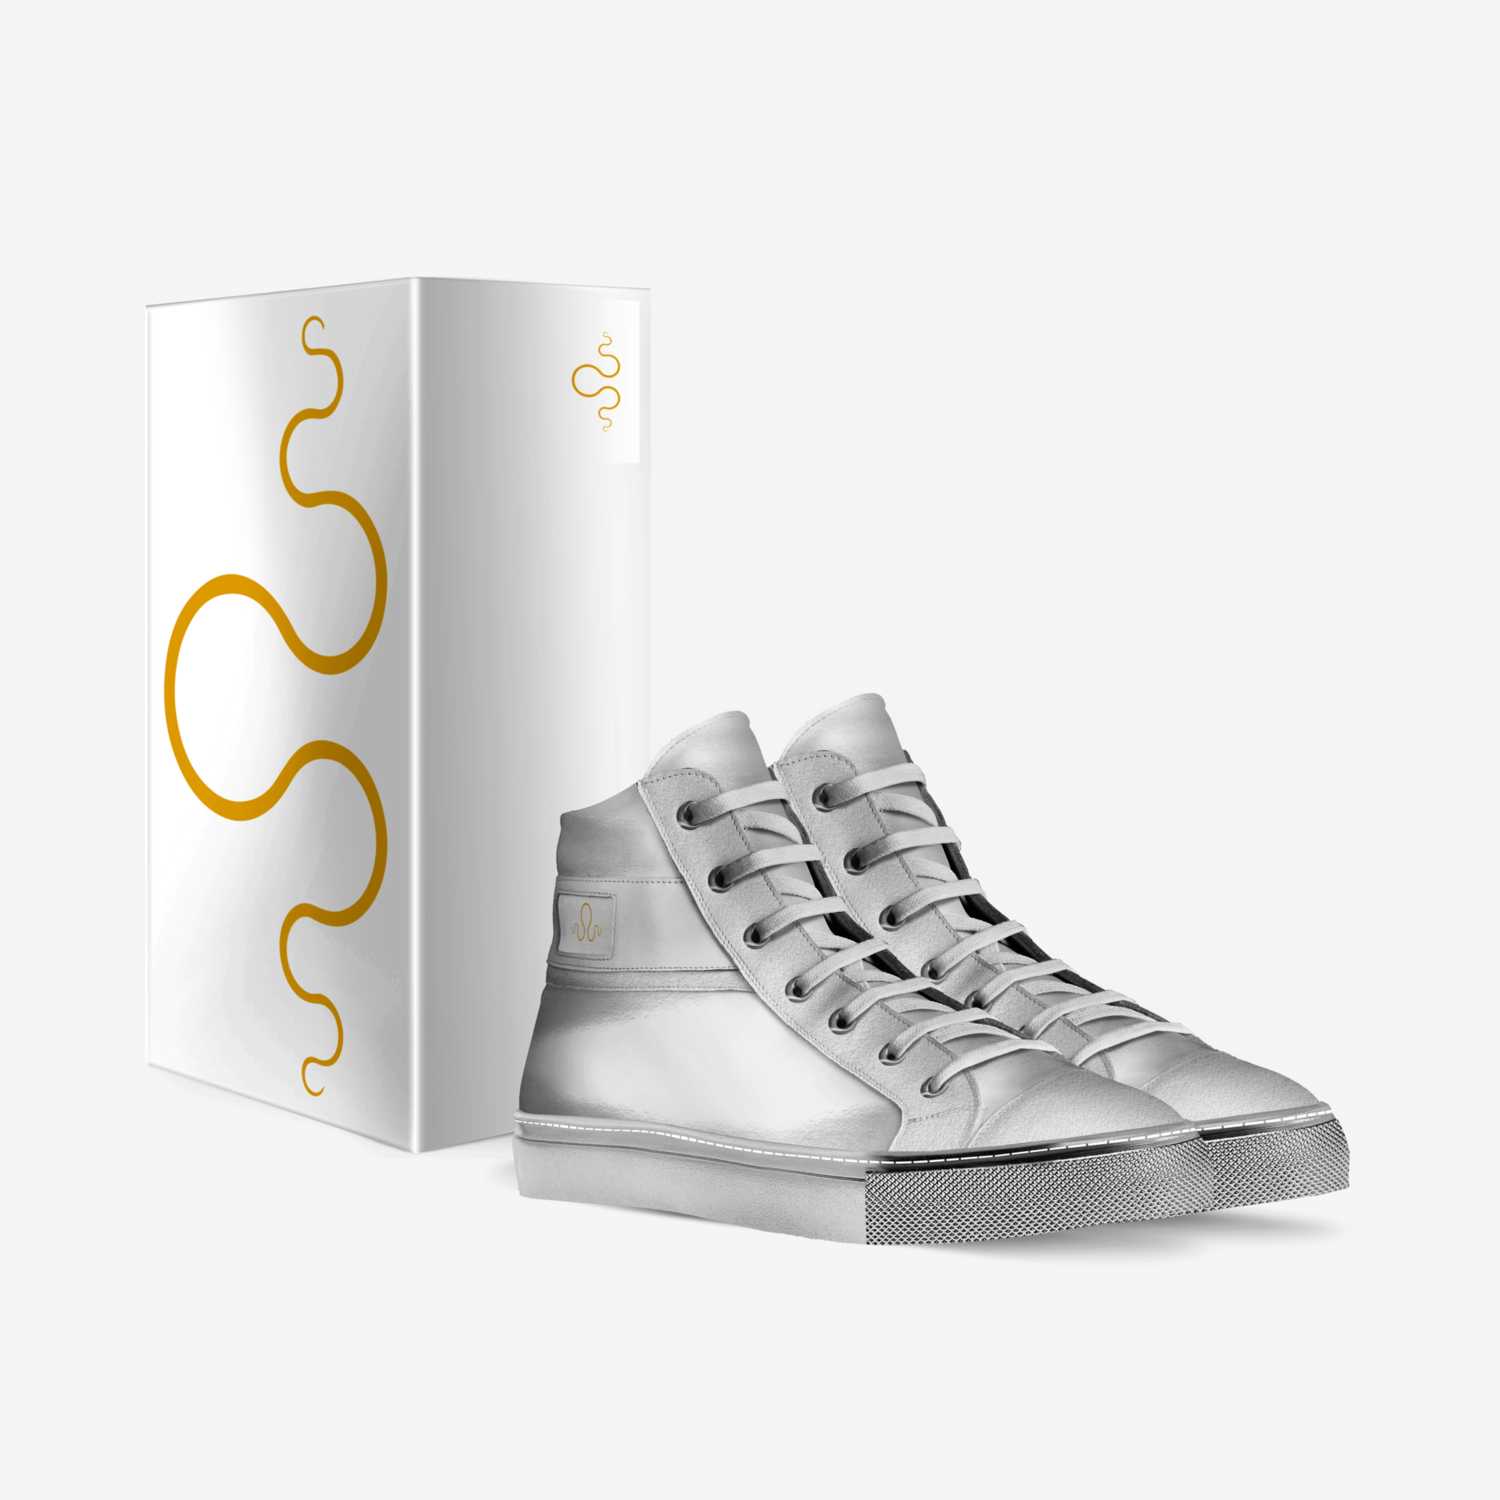 Kraken ROYALTI custom made in Italy shoes by Carlos Segarra | Box view